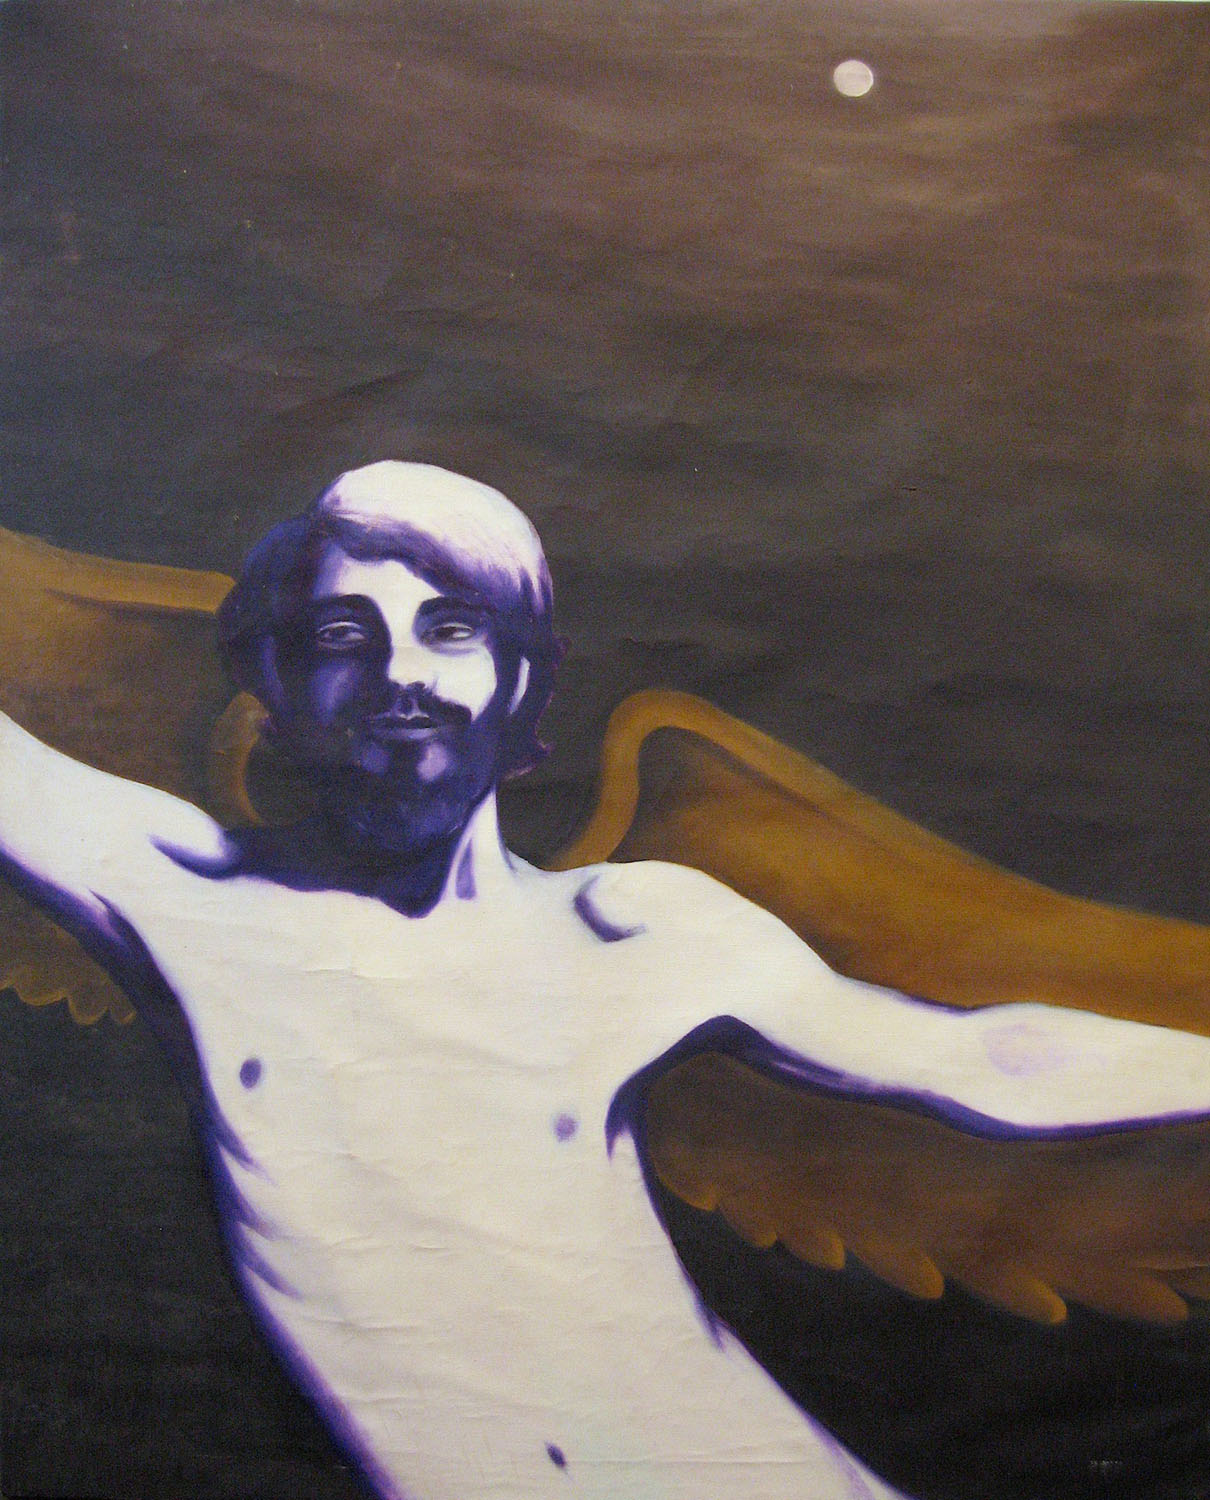 Curt McDowell, *Untitled (Angel)*, 1968. Oil on canvas